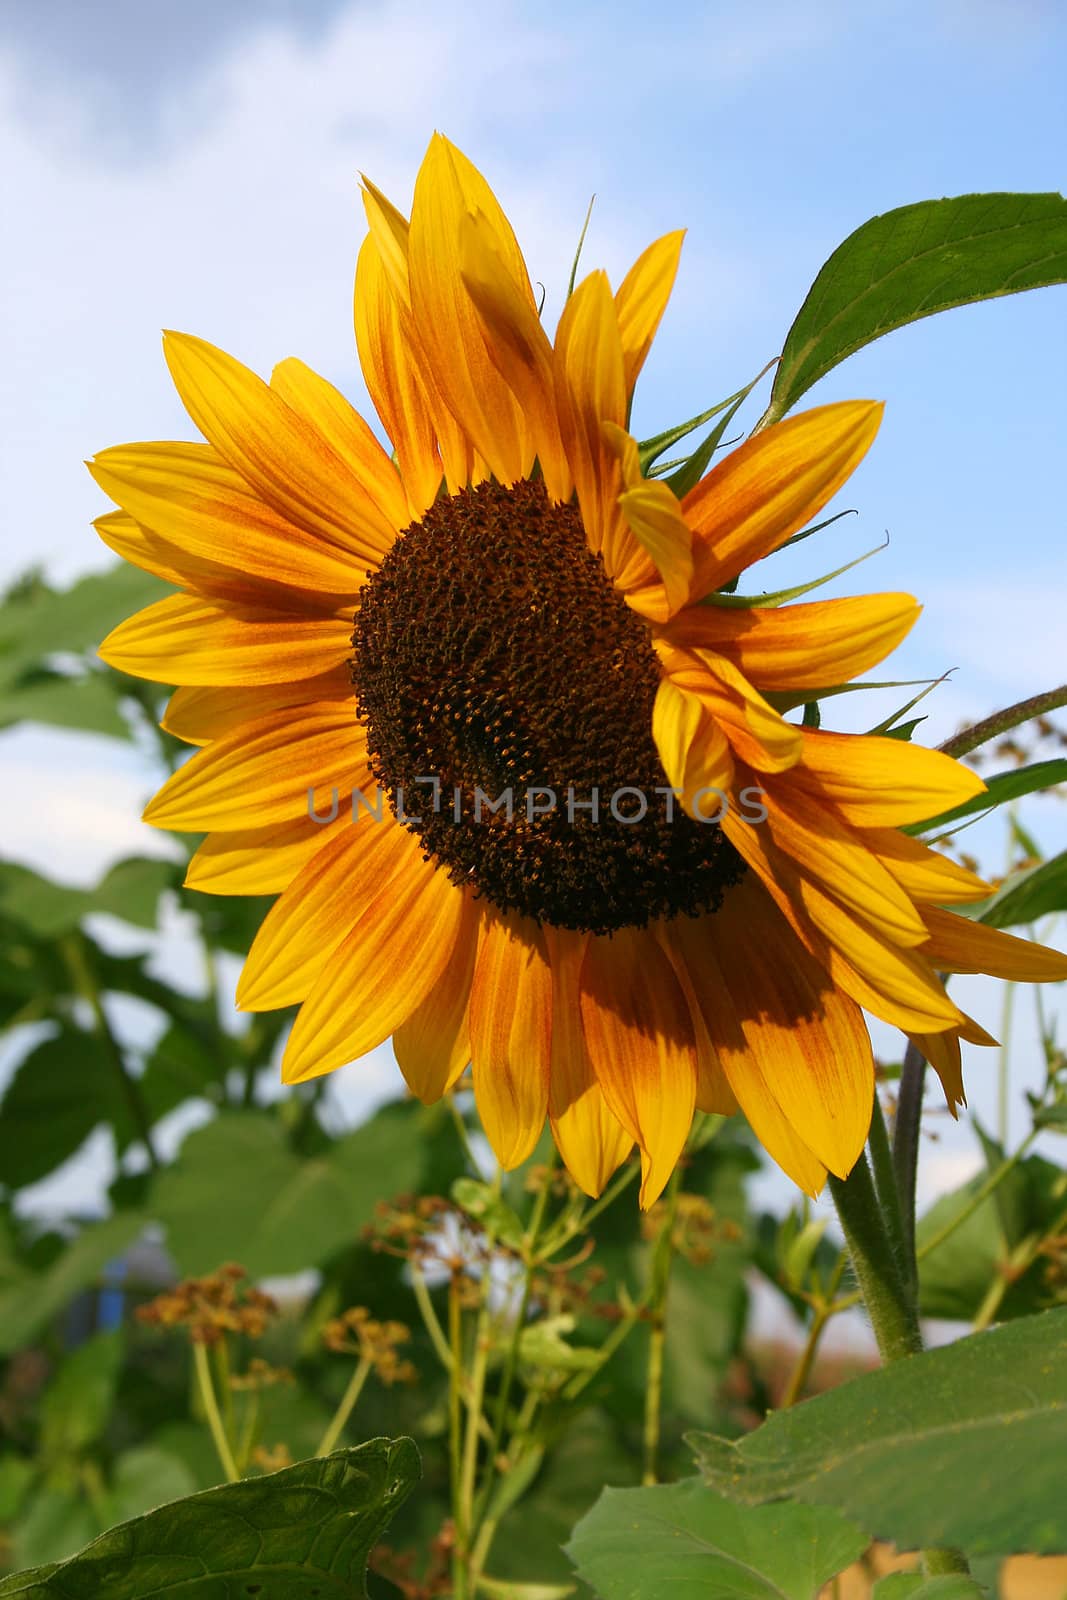 A sunflower at summertime in the garden